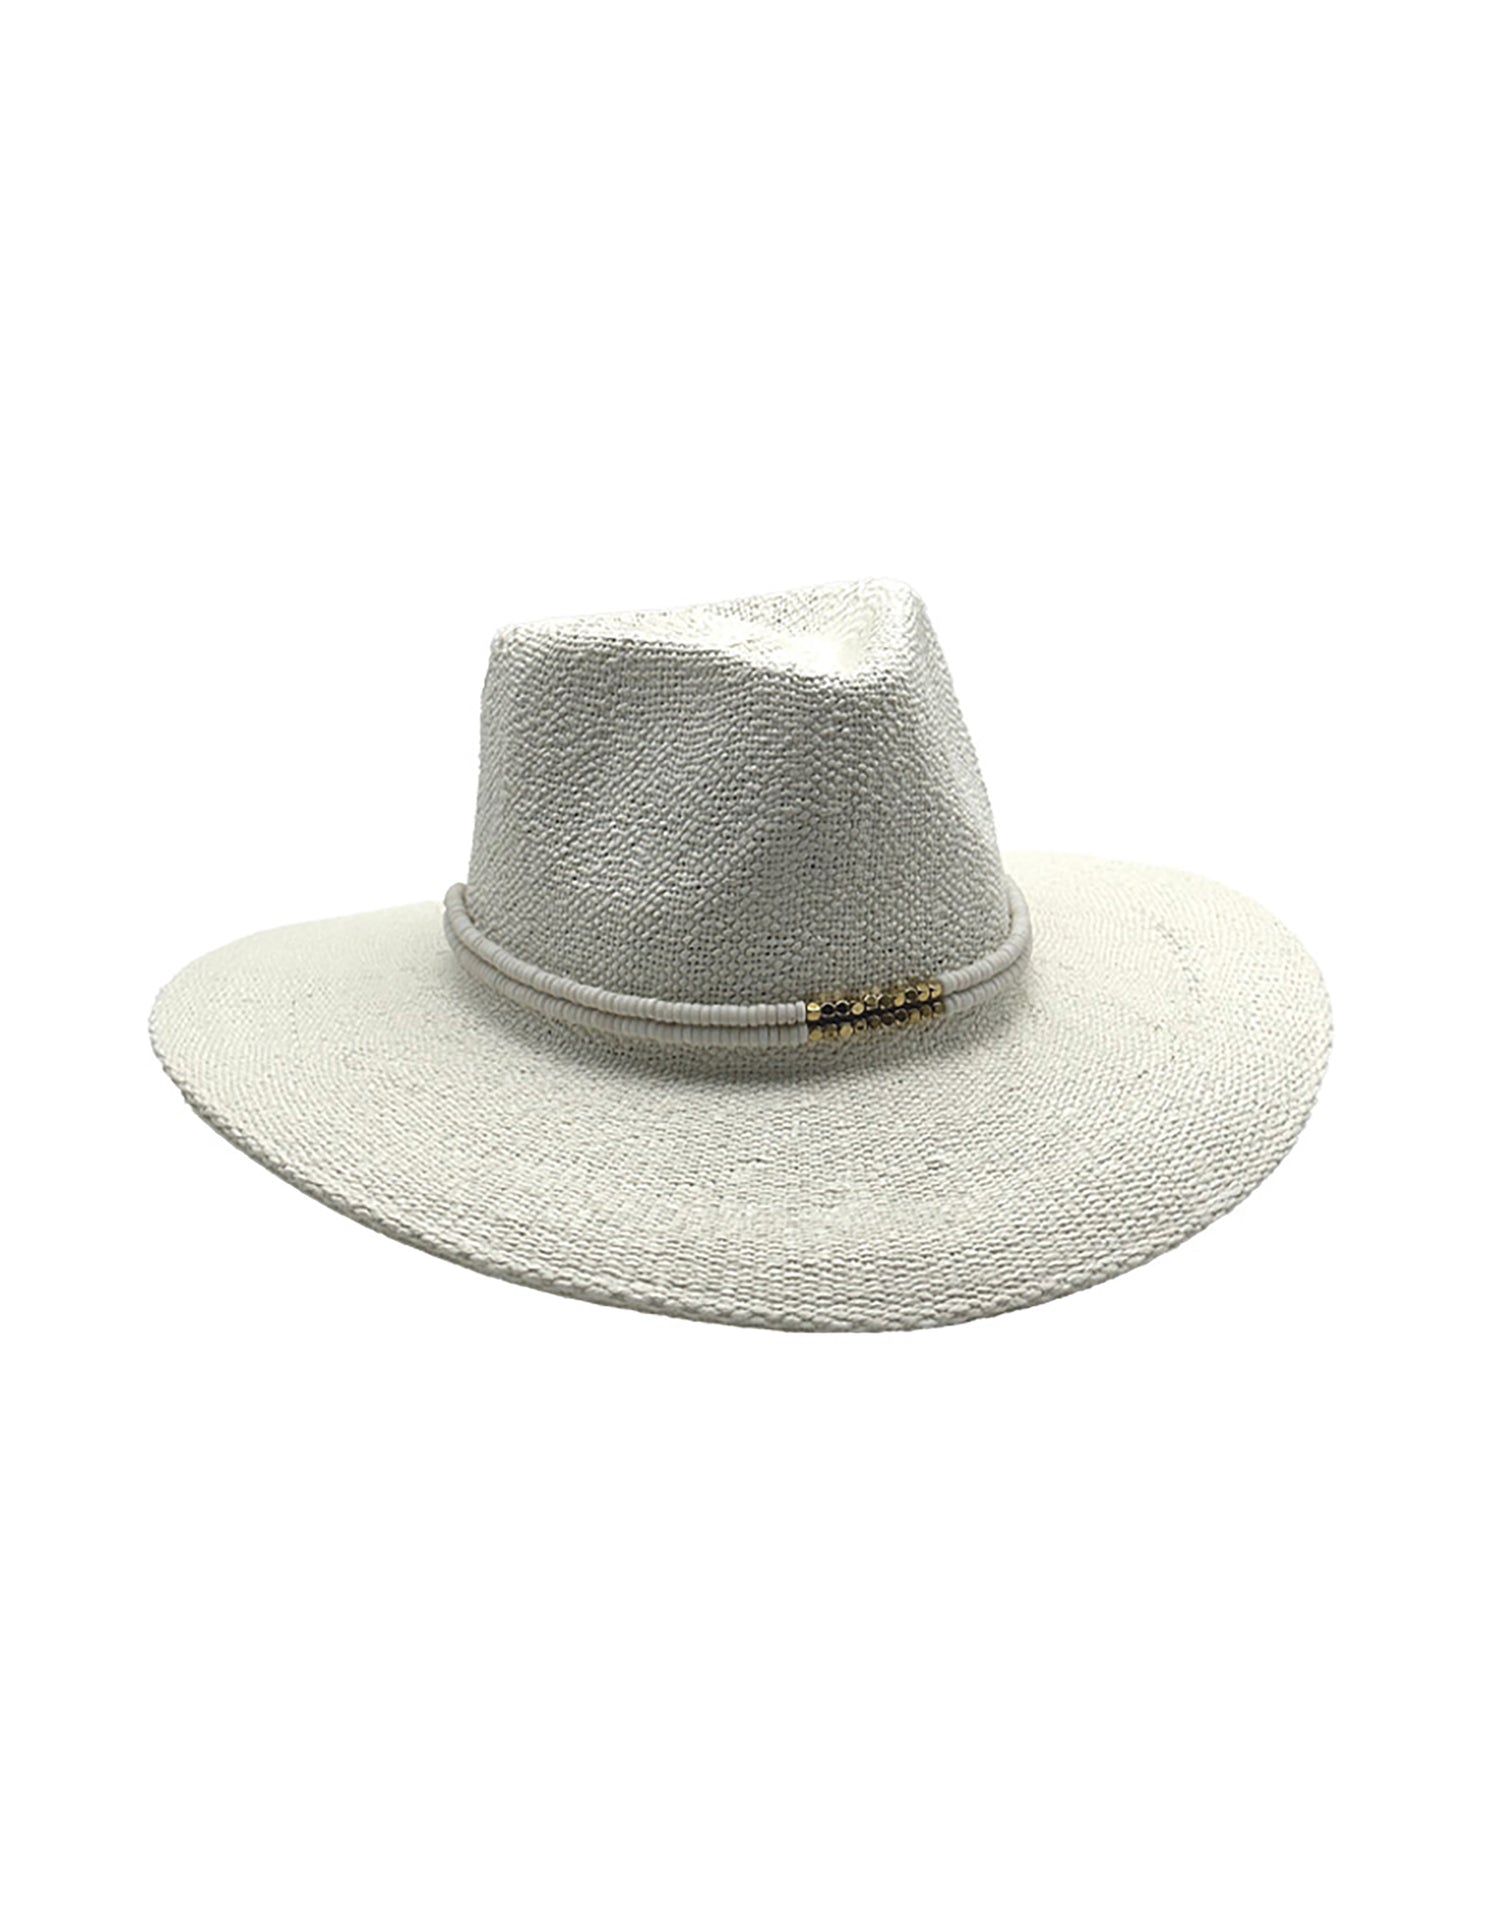 Angel Hat by Nikki Beach in White - Front View